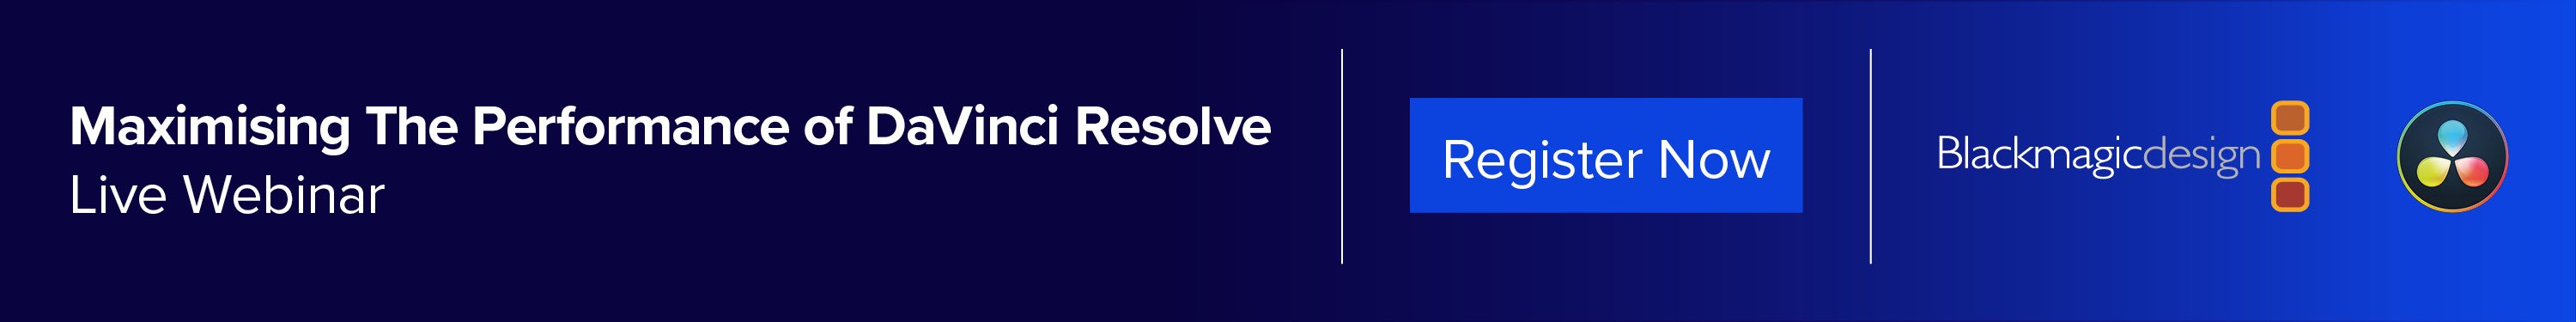 Maximising the performance of DaVinci Resolve webinar.